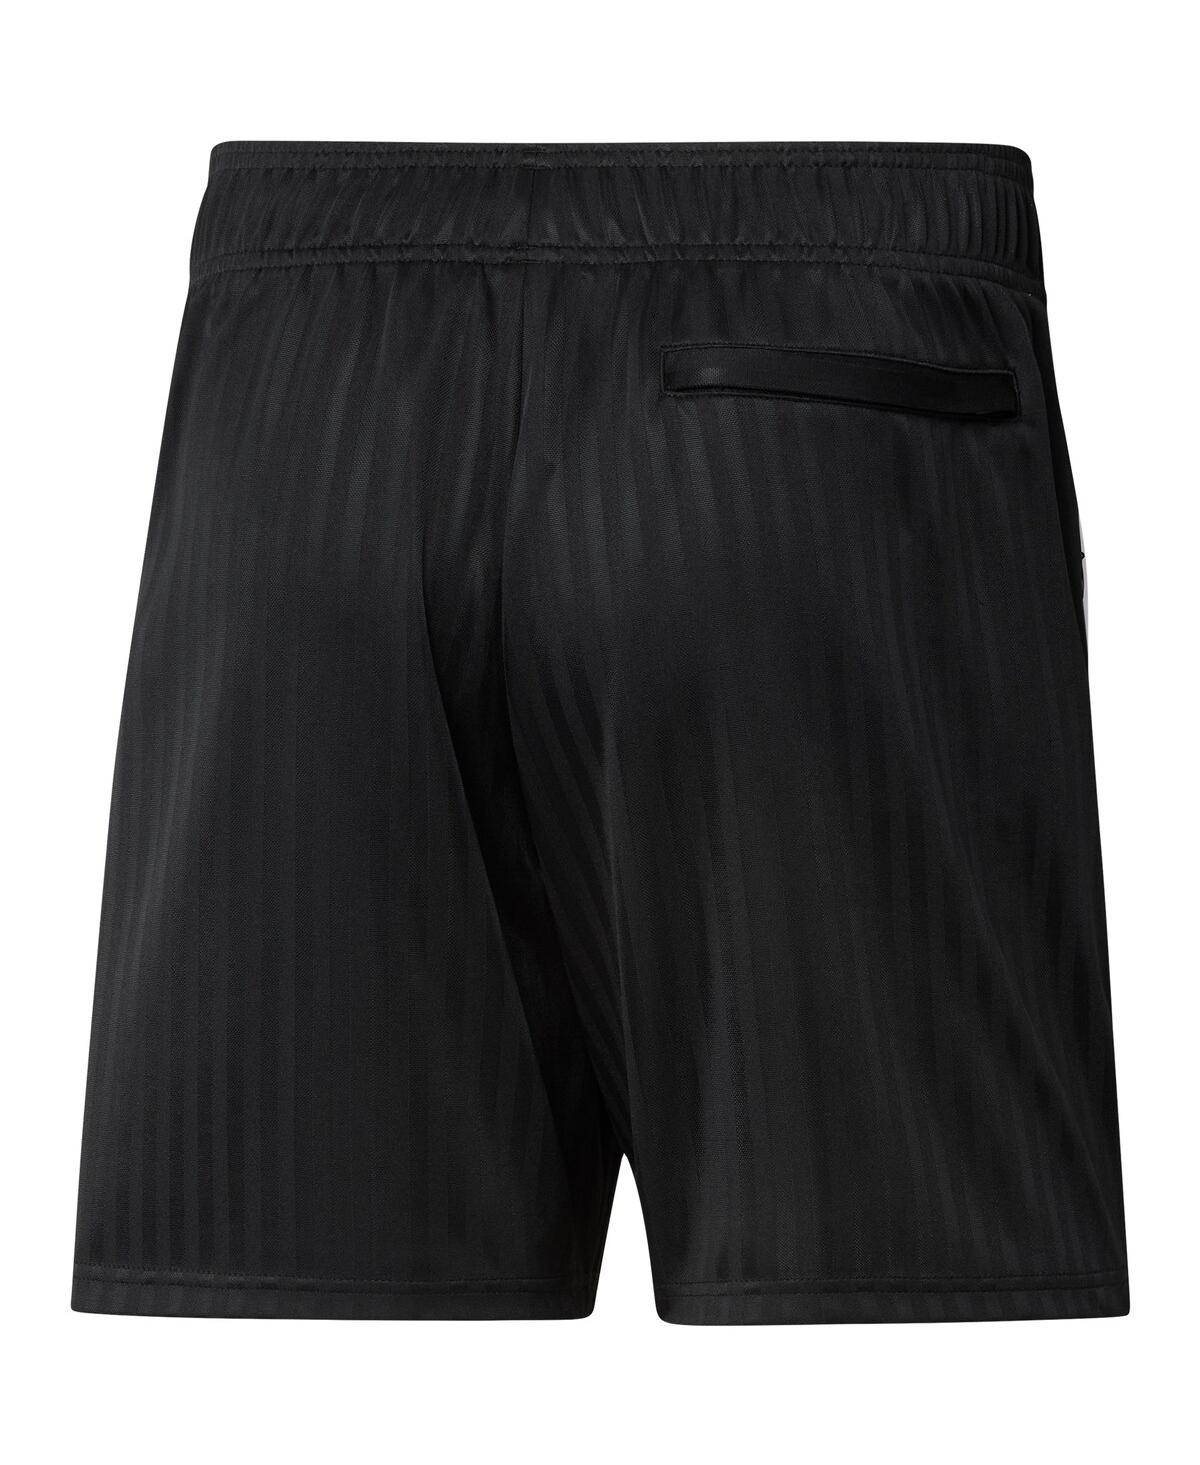 Shop Adidas Originals Men's Adidas Black Juventus Football Icon Shorts